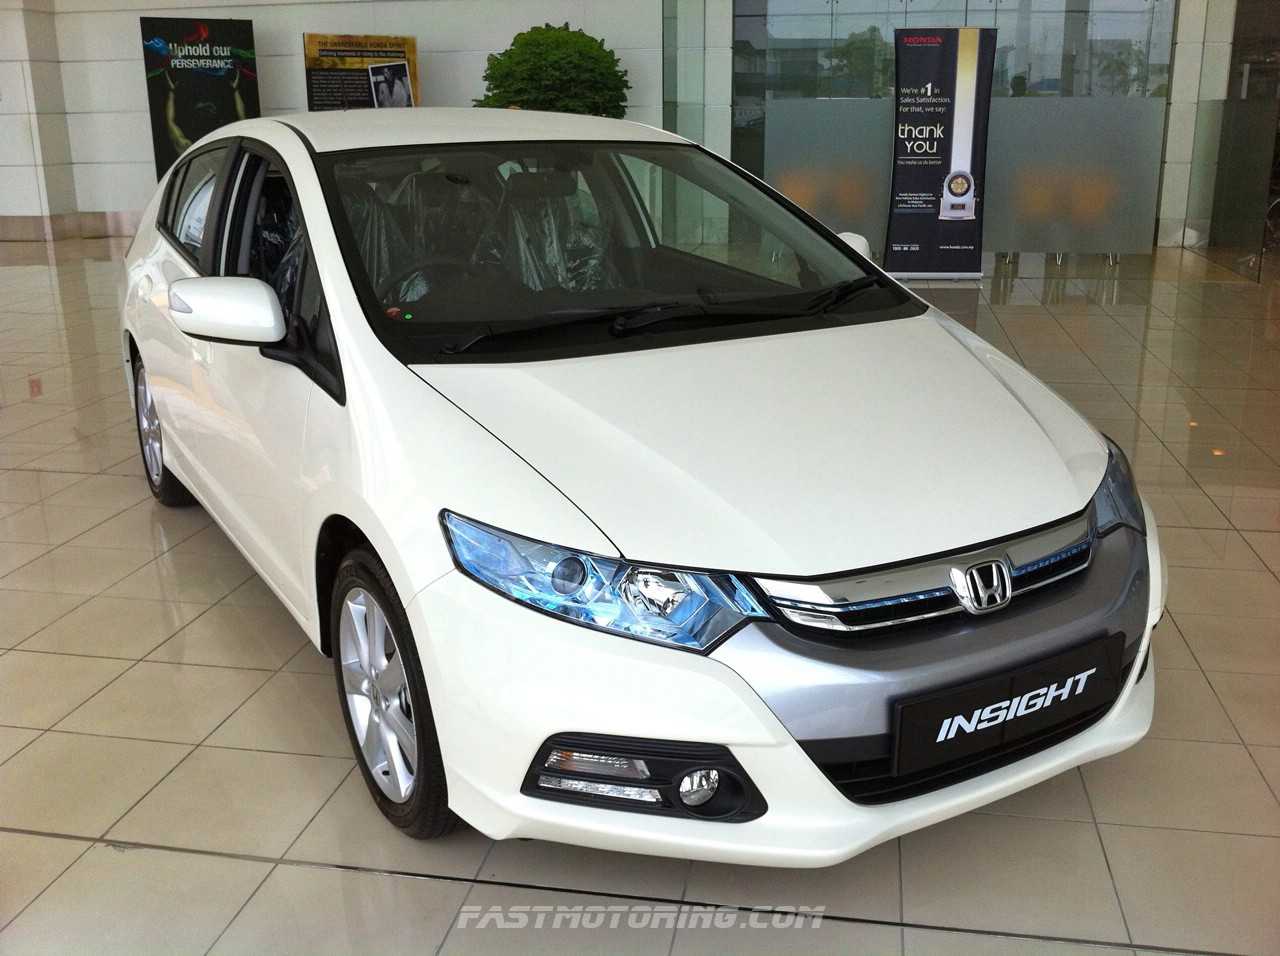 Honda insight facelift malaysia